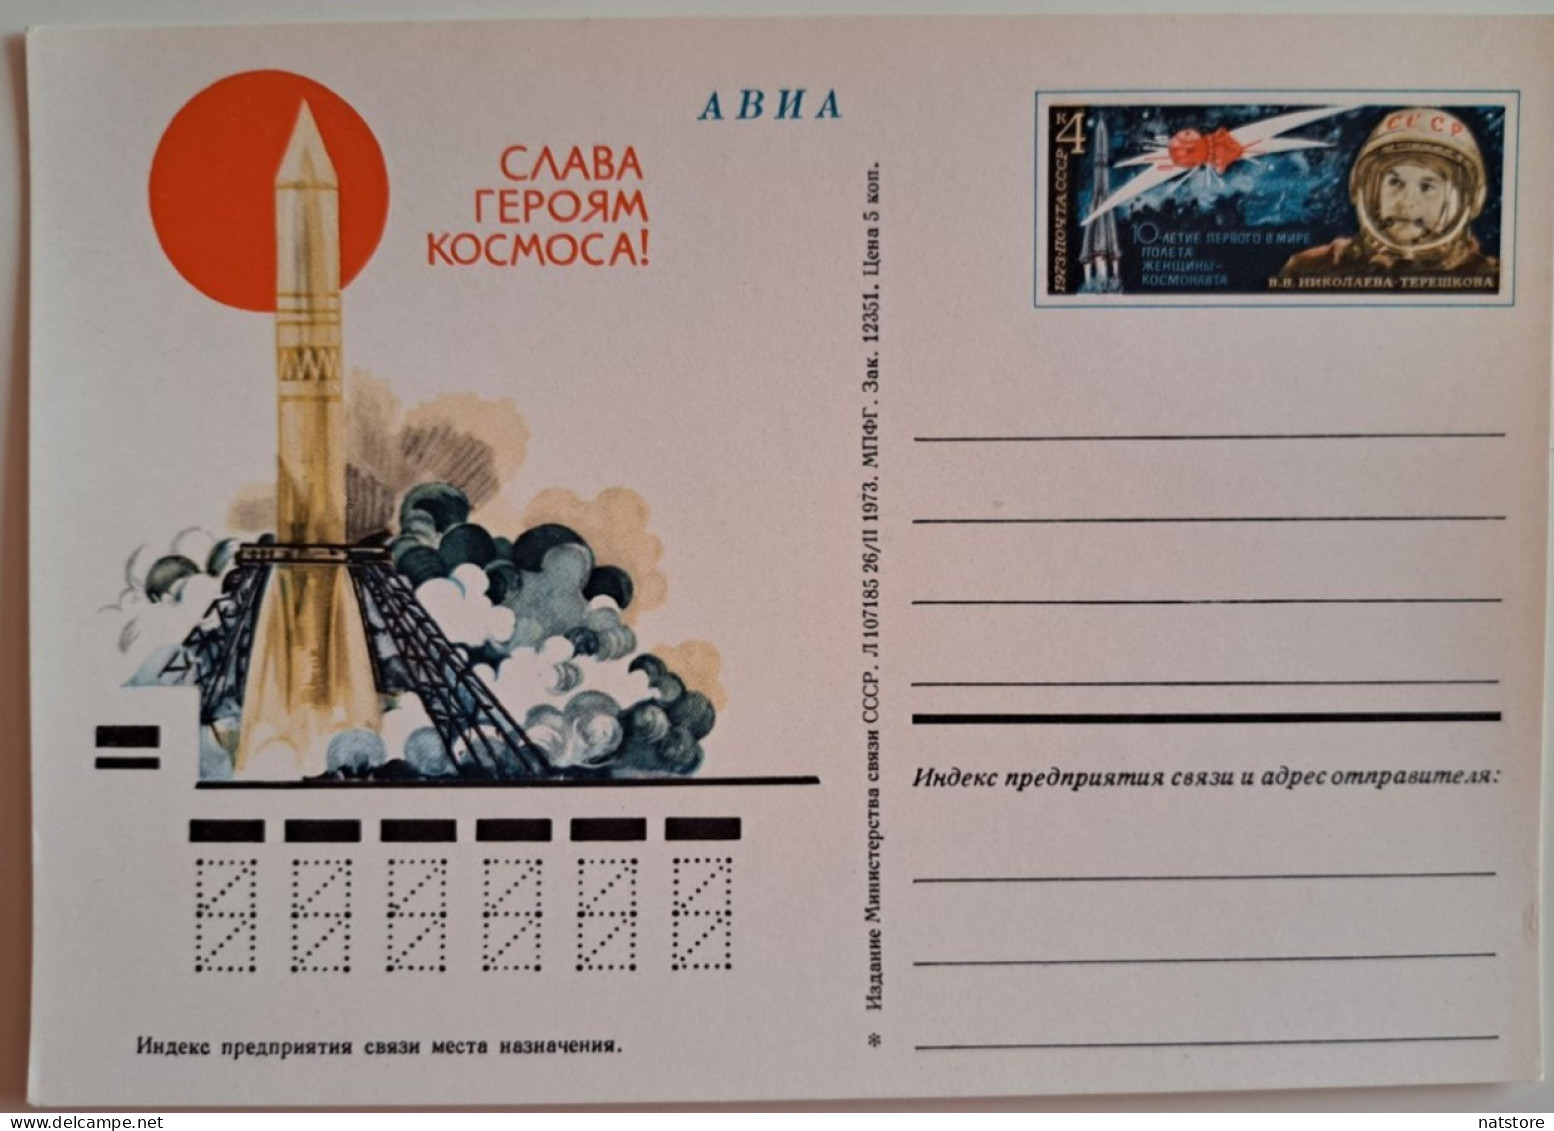 1973..USSR..POSTAL CARD  WITH STAMP..GLORY TO SPACE HEROES..V.V.NIKOLAEVA-TERESHKOVA - UdSSR